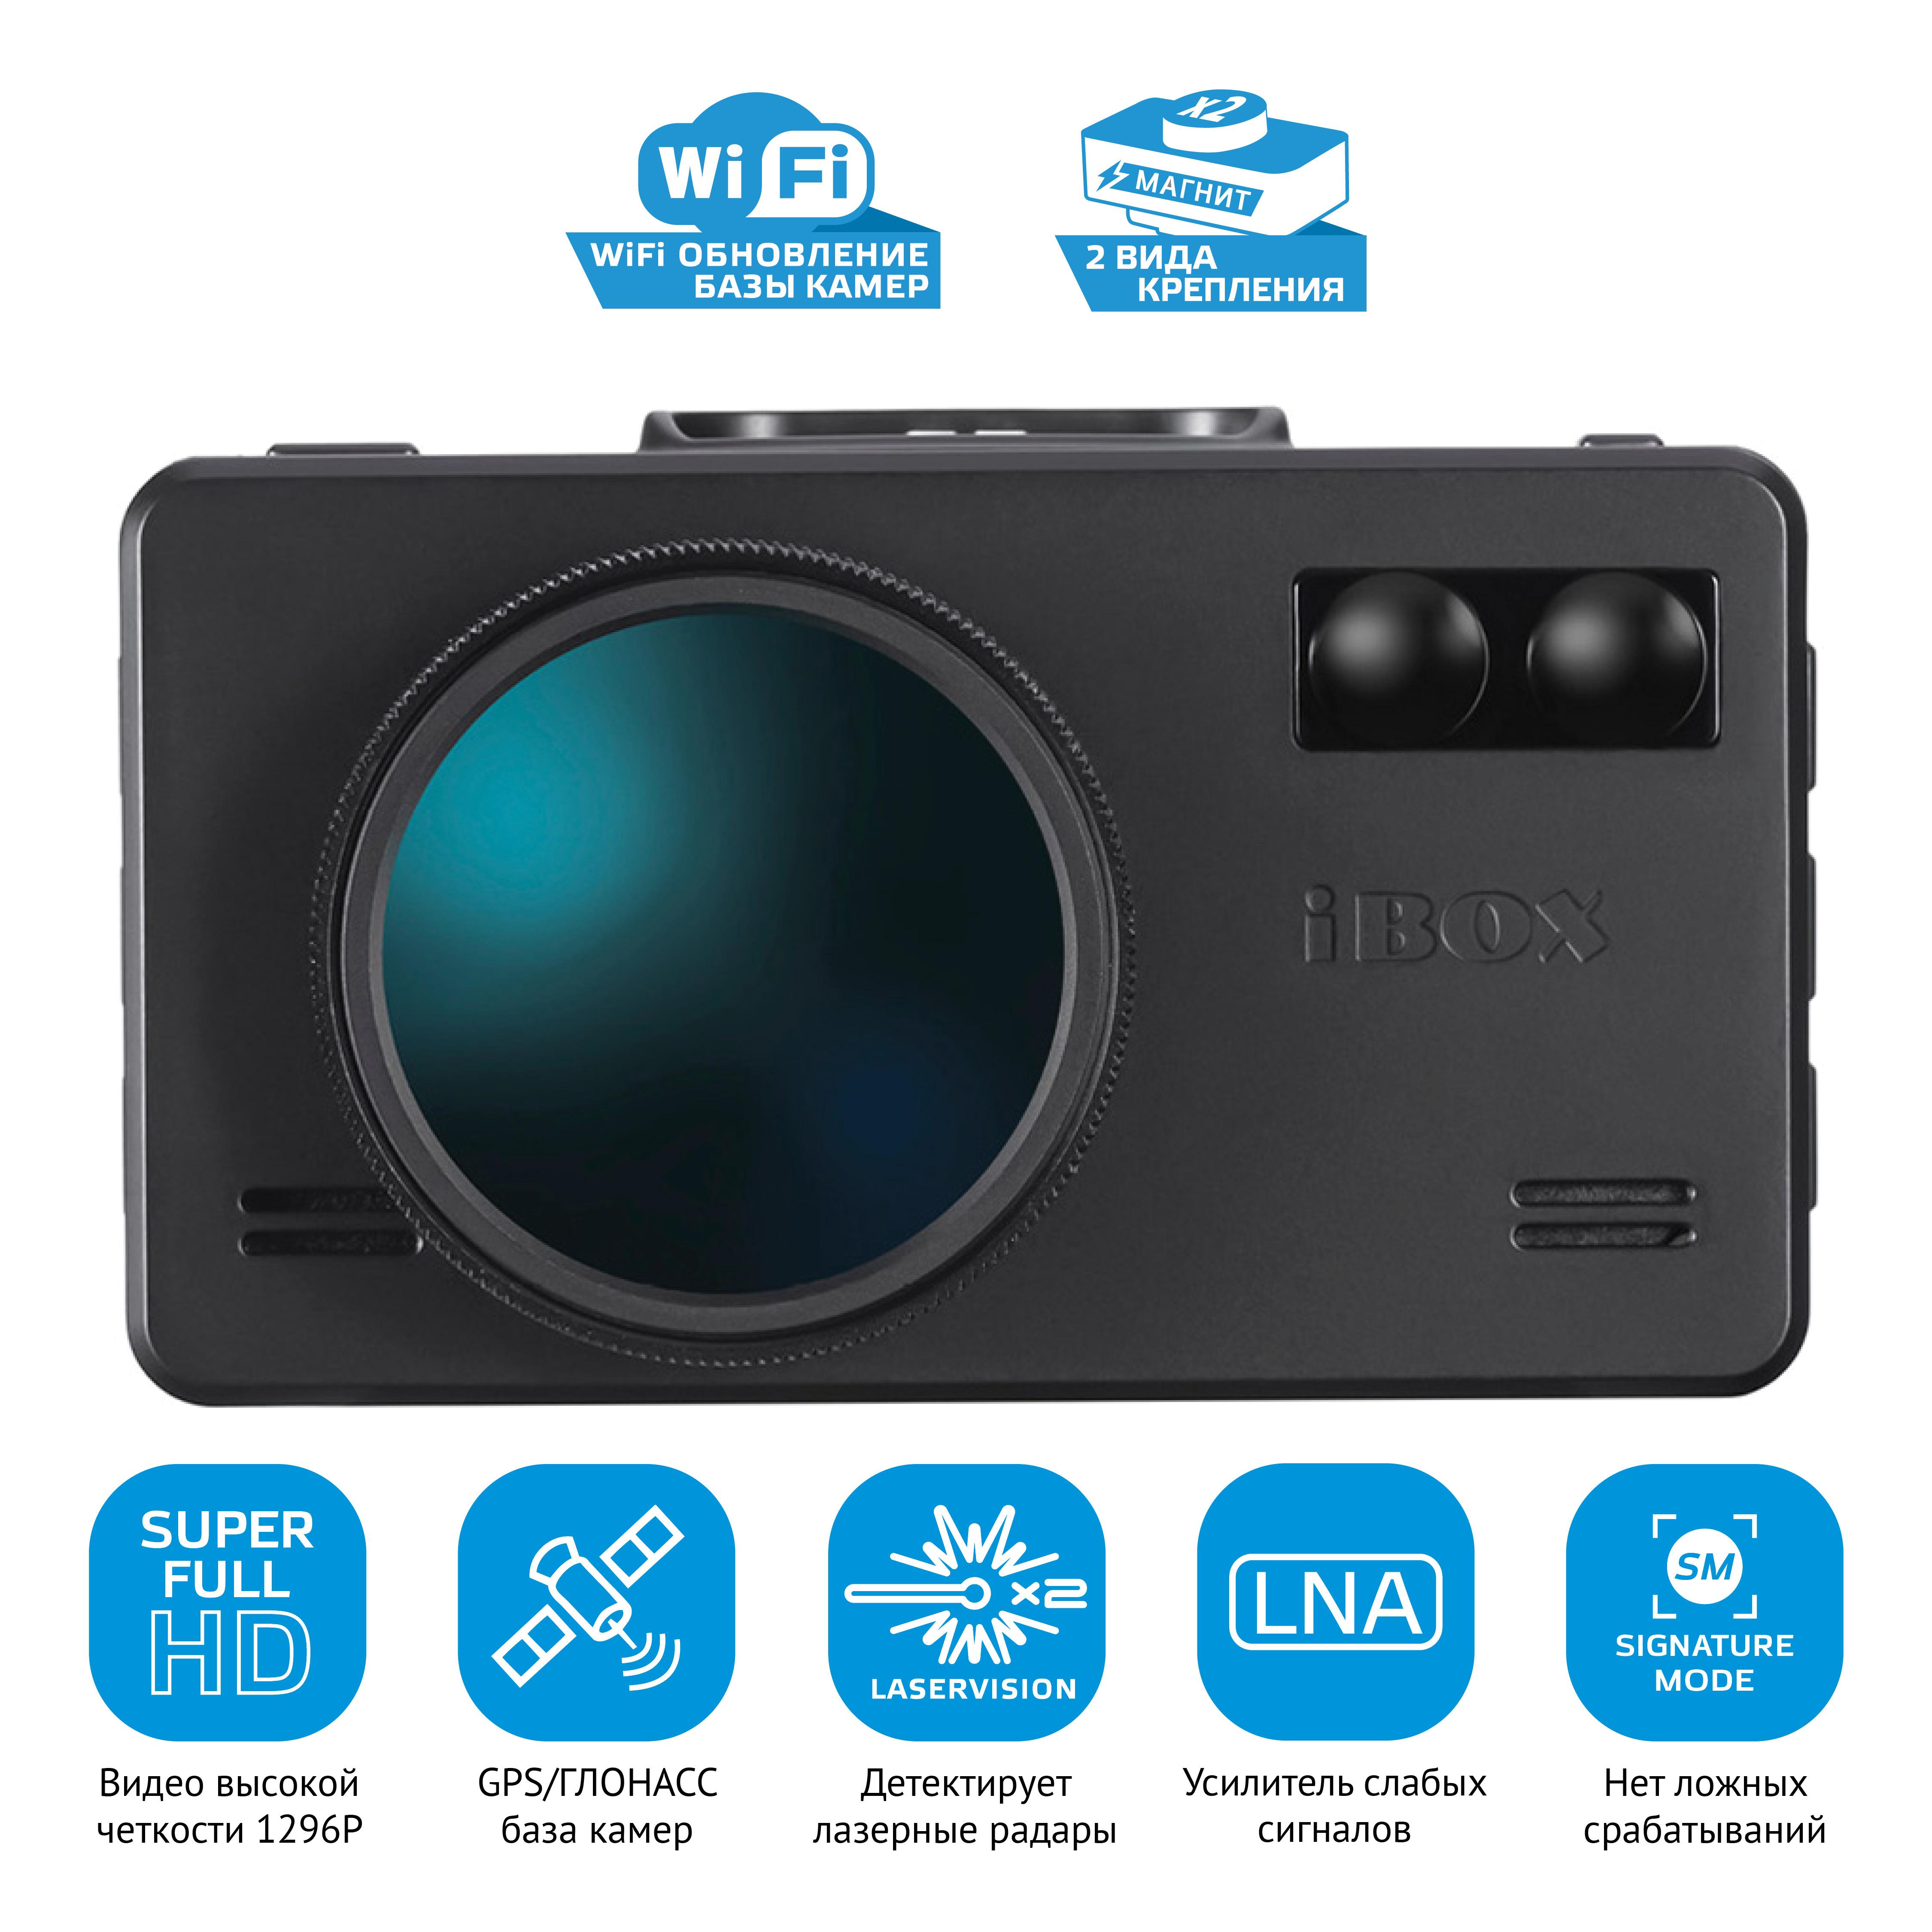 IBox iCon LaserVision WiFi Signature S современный и продвинутый гибрид по адекватной цене